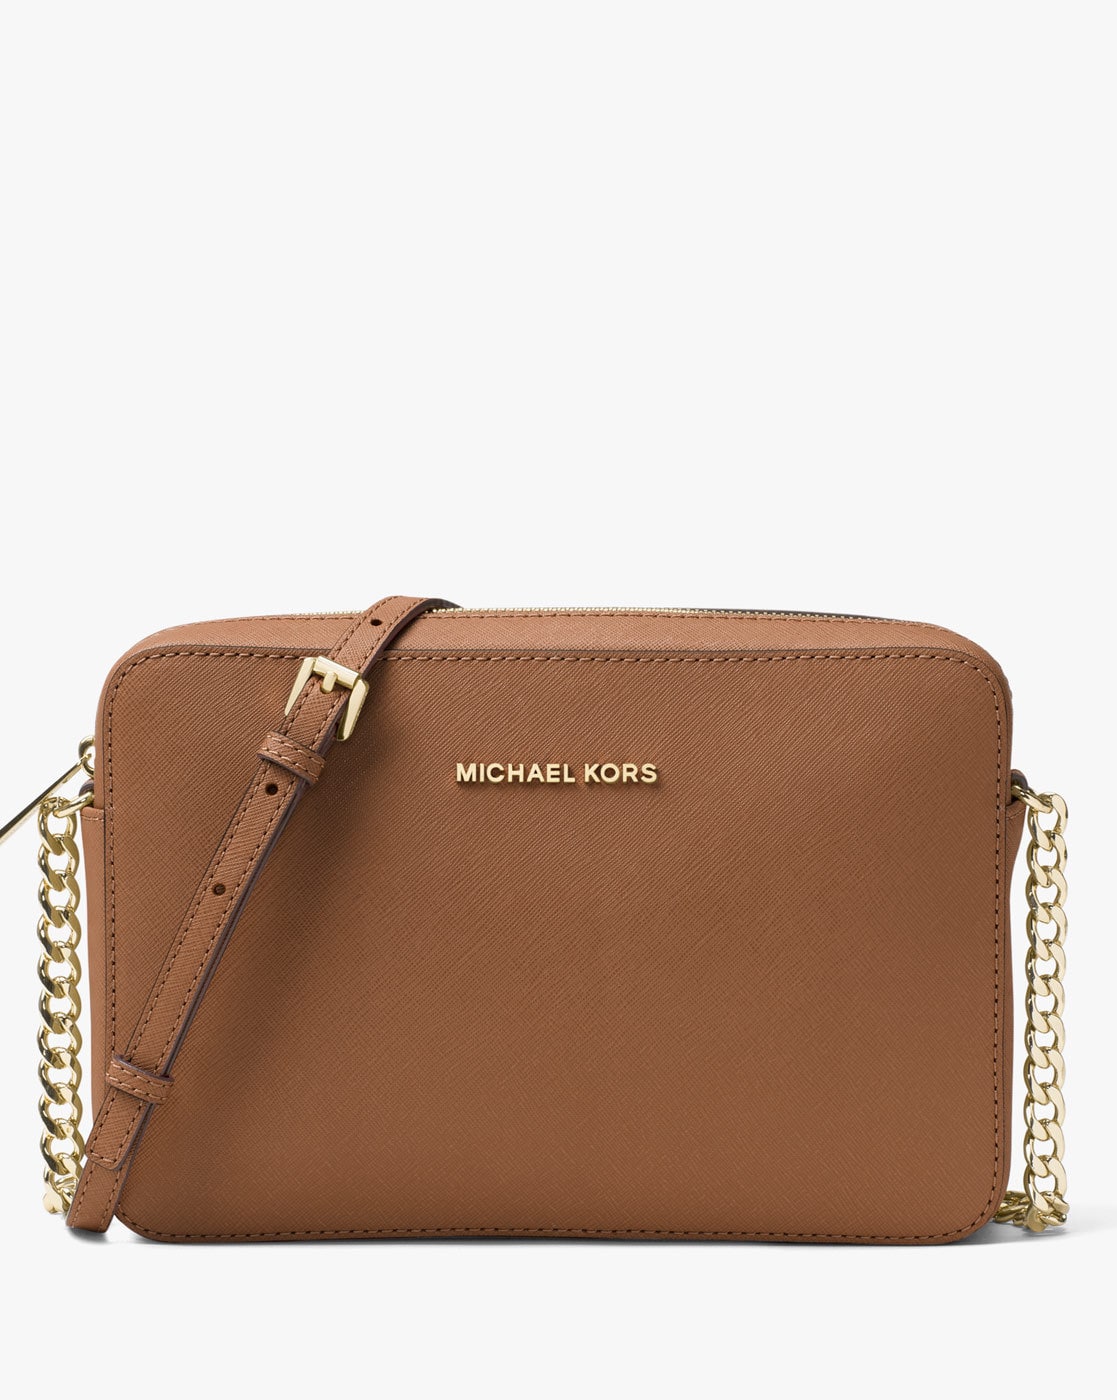 Michael Kors Reed Large Brown Satchel Shoulder Handbag Belted Purse  Crossbody : Clothing, Shoes & Jewelry - Amazon.com